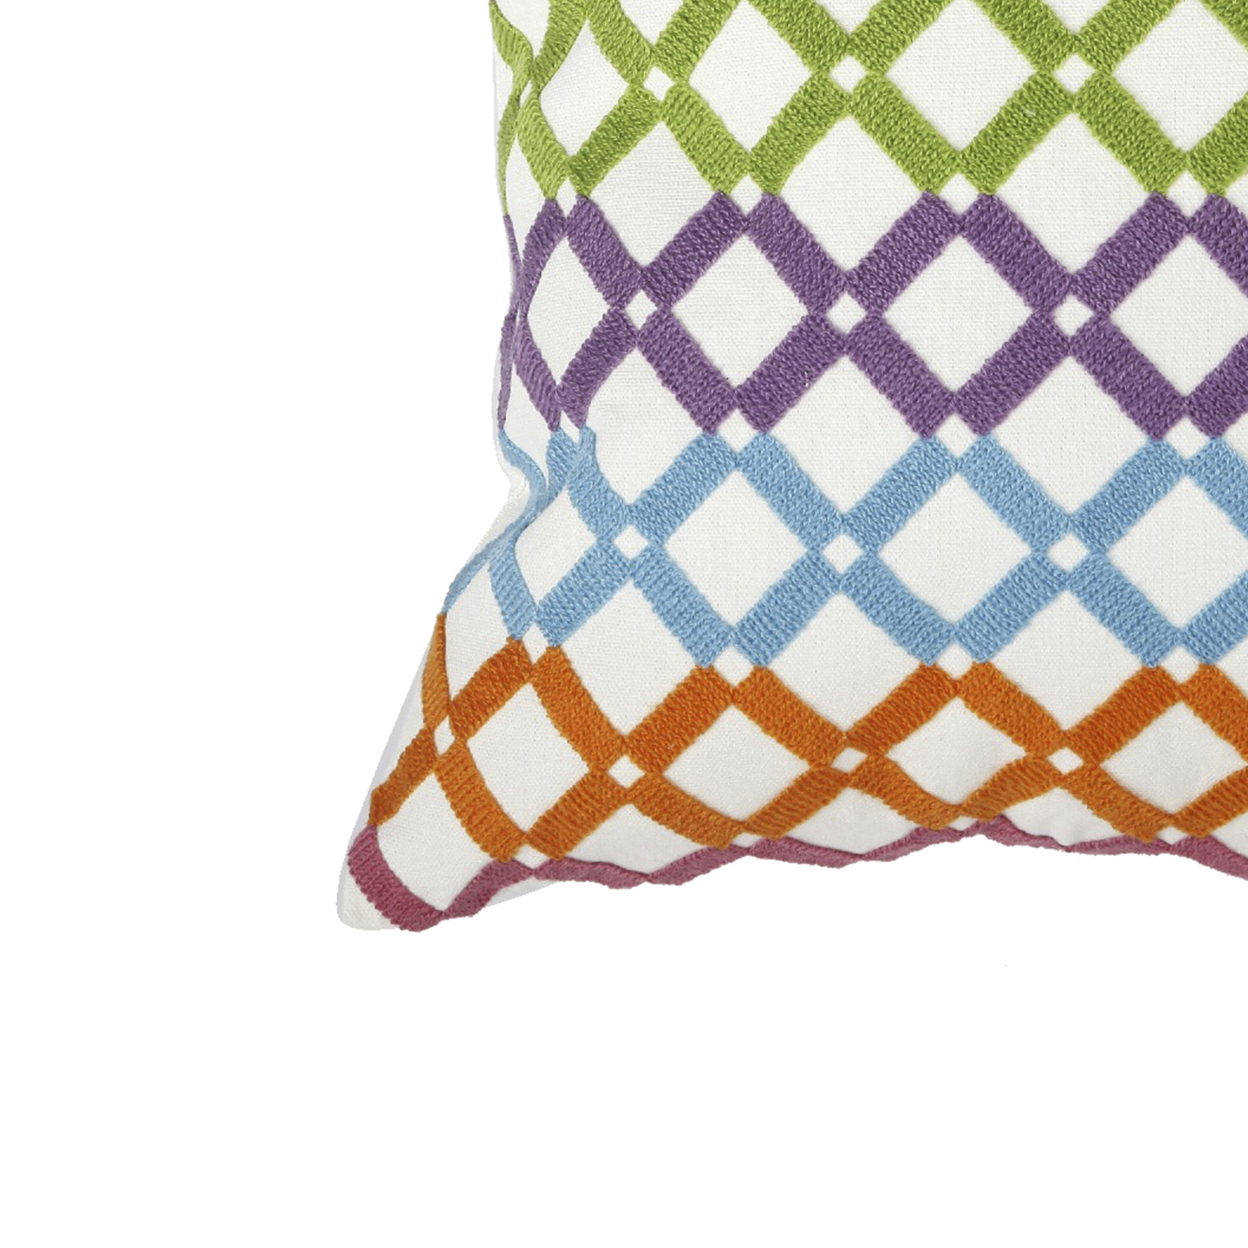 18 X 18 Inch Cotton Pillow With Lattice Embroidery, Set Of 2, Multicolor- Saltoro Sherpi